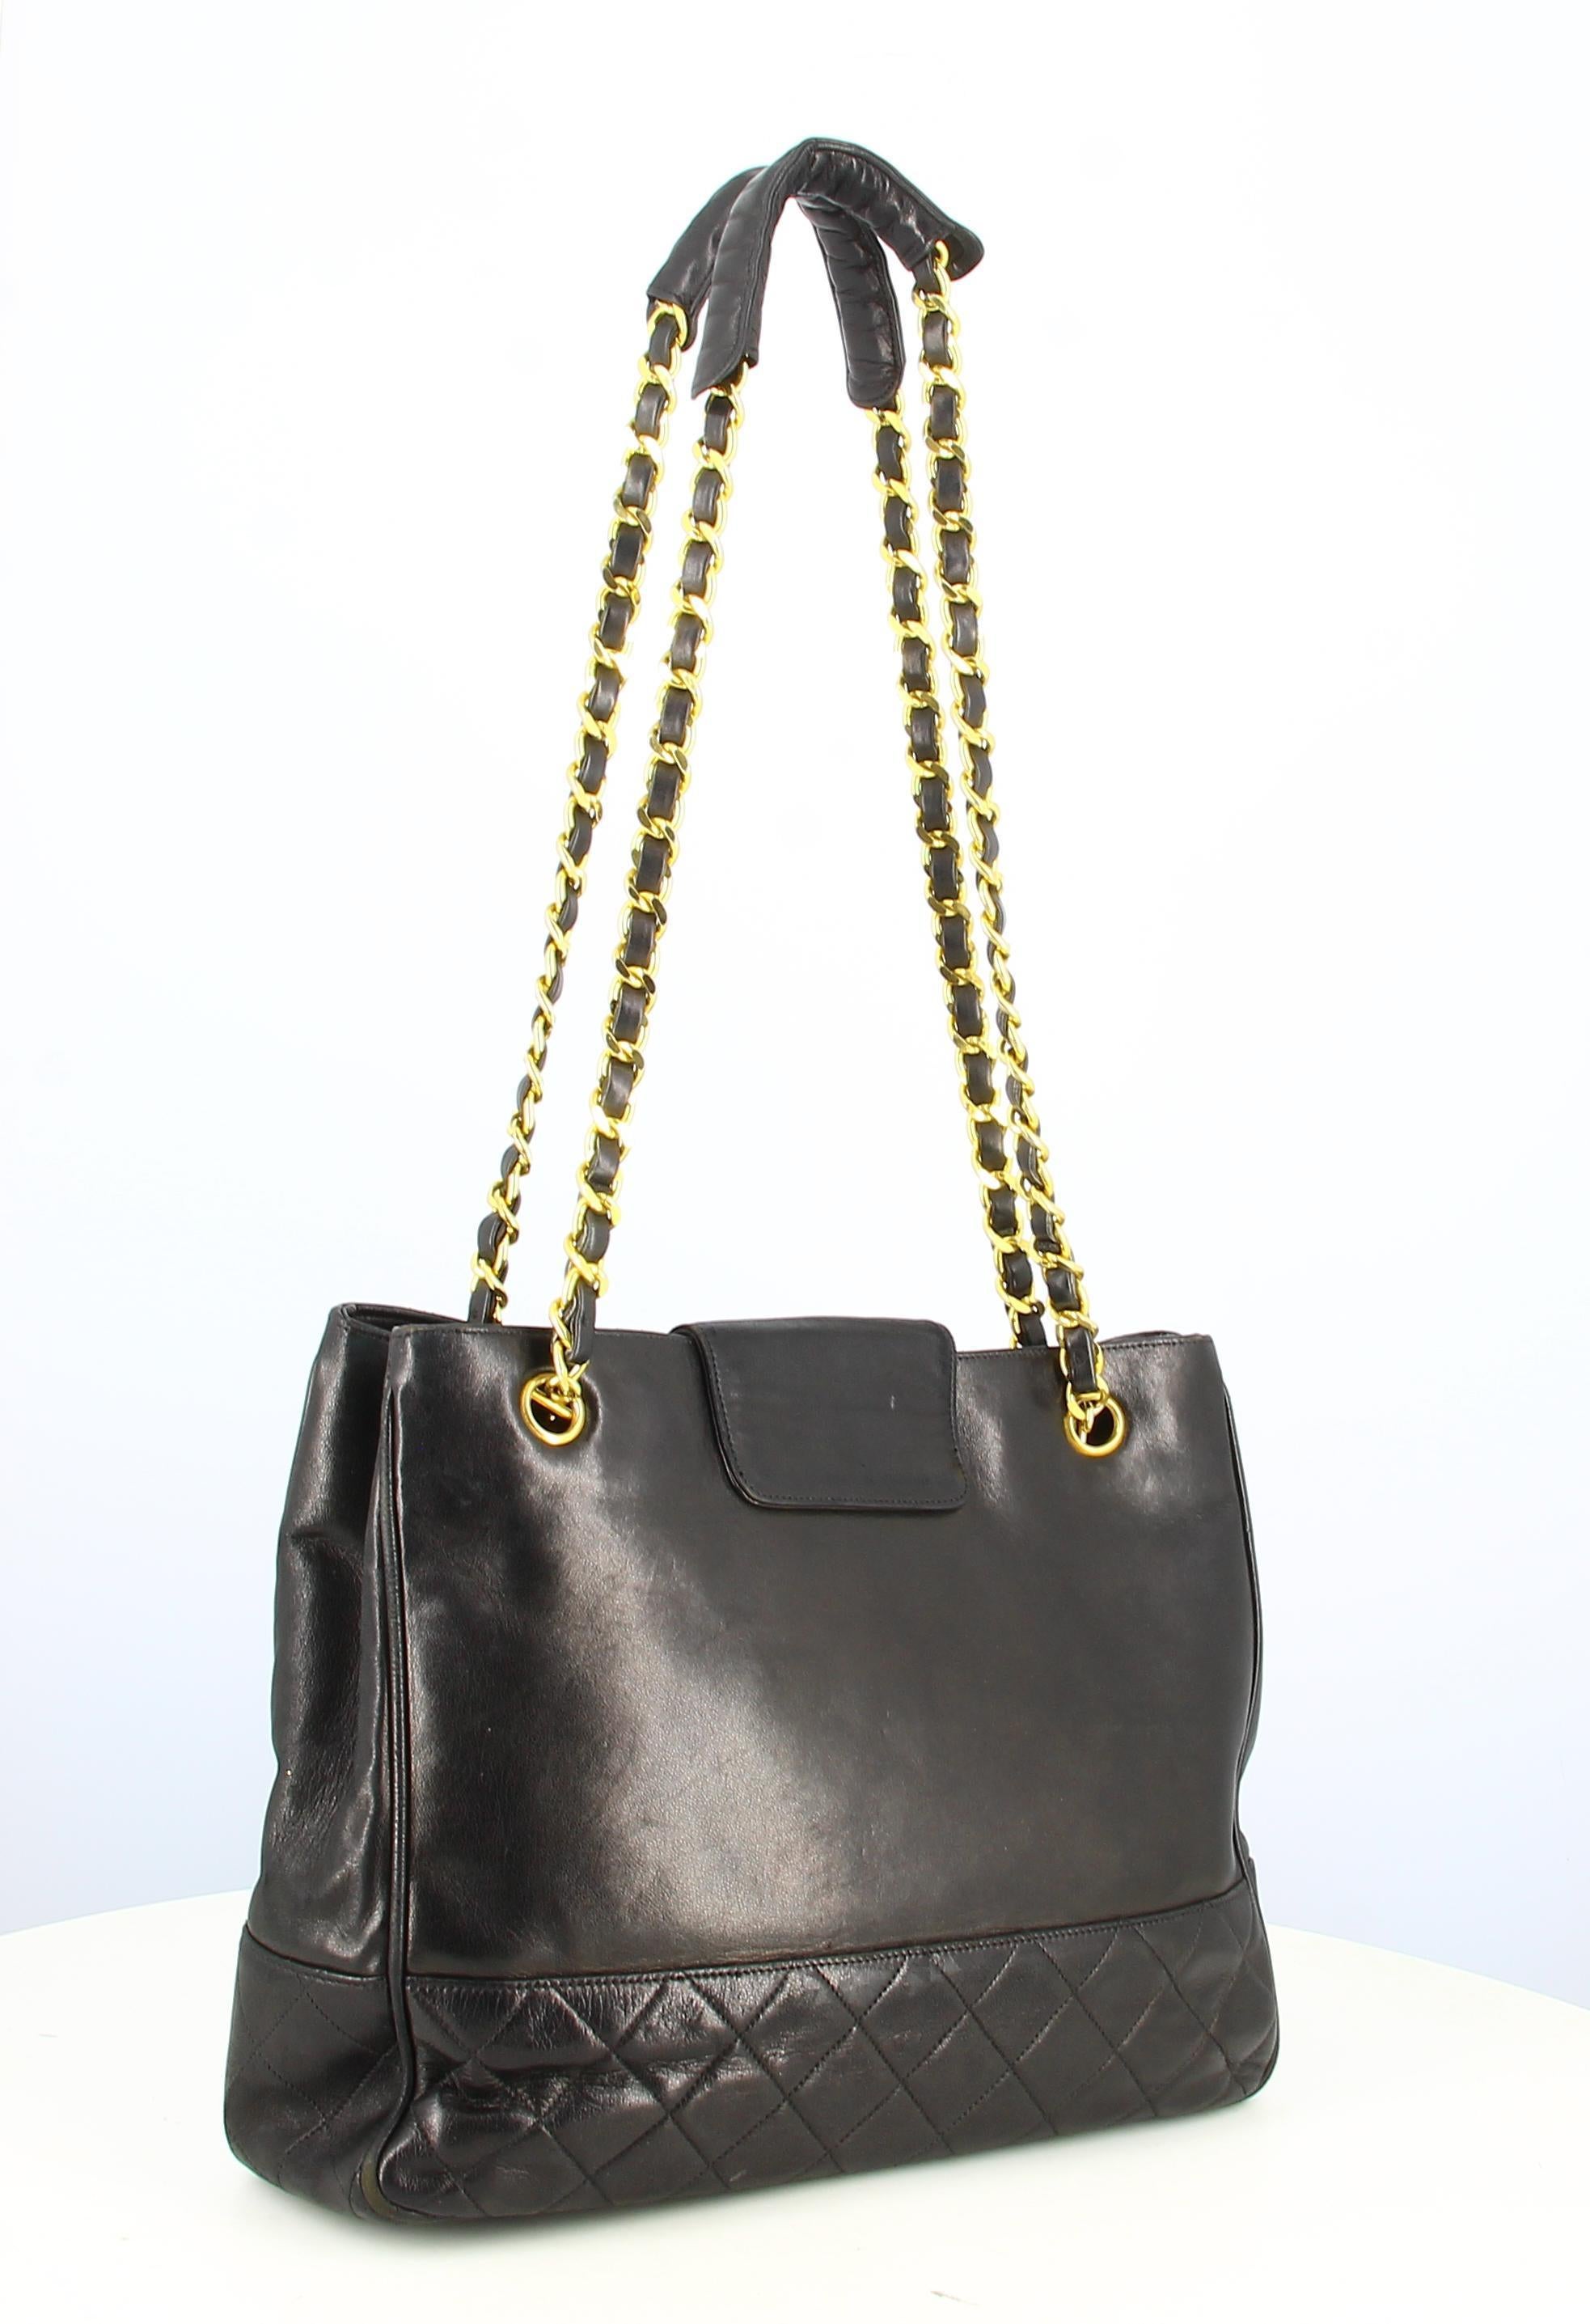 Women's 1989-1991 Chanel Black Leather Handbag